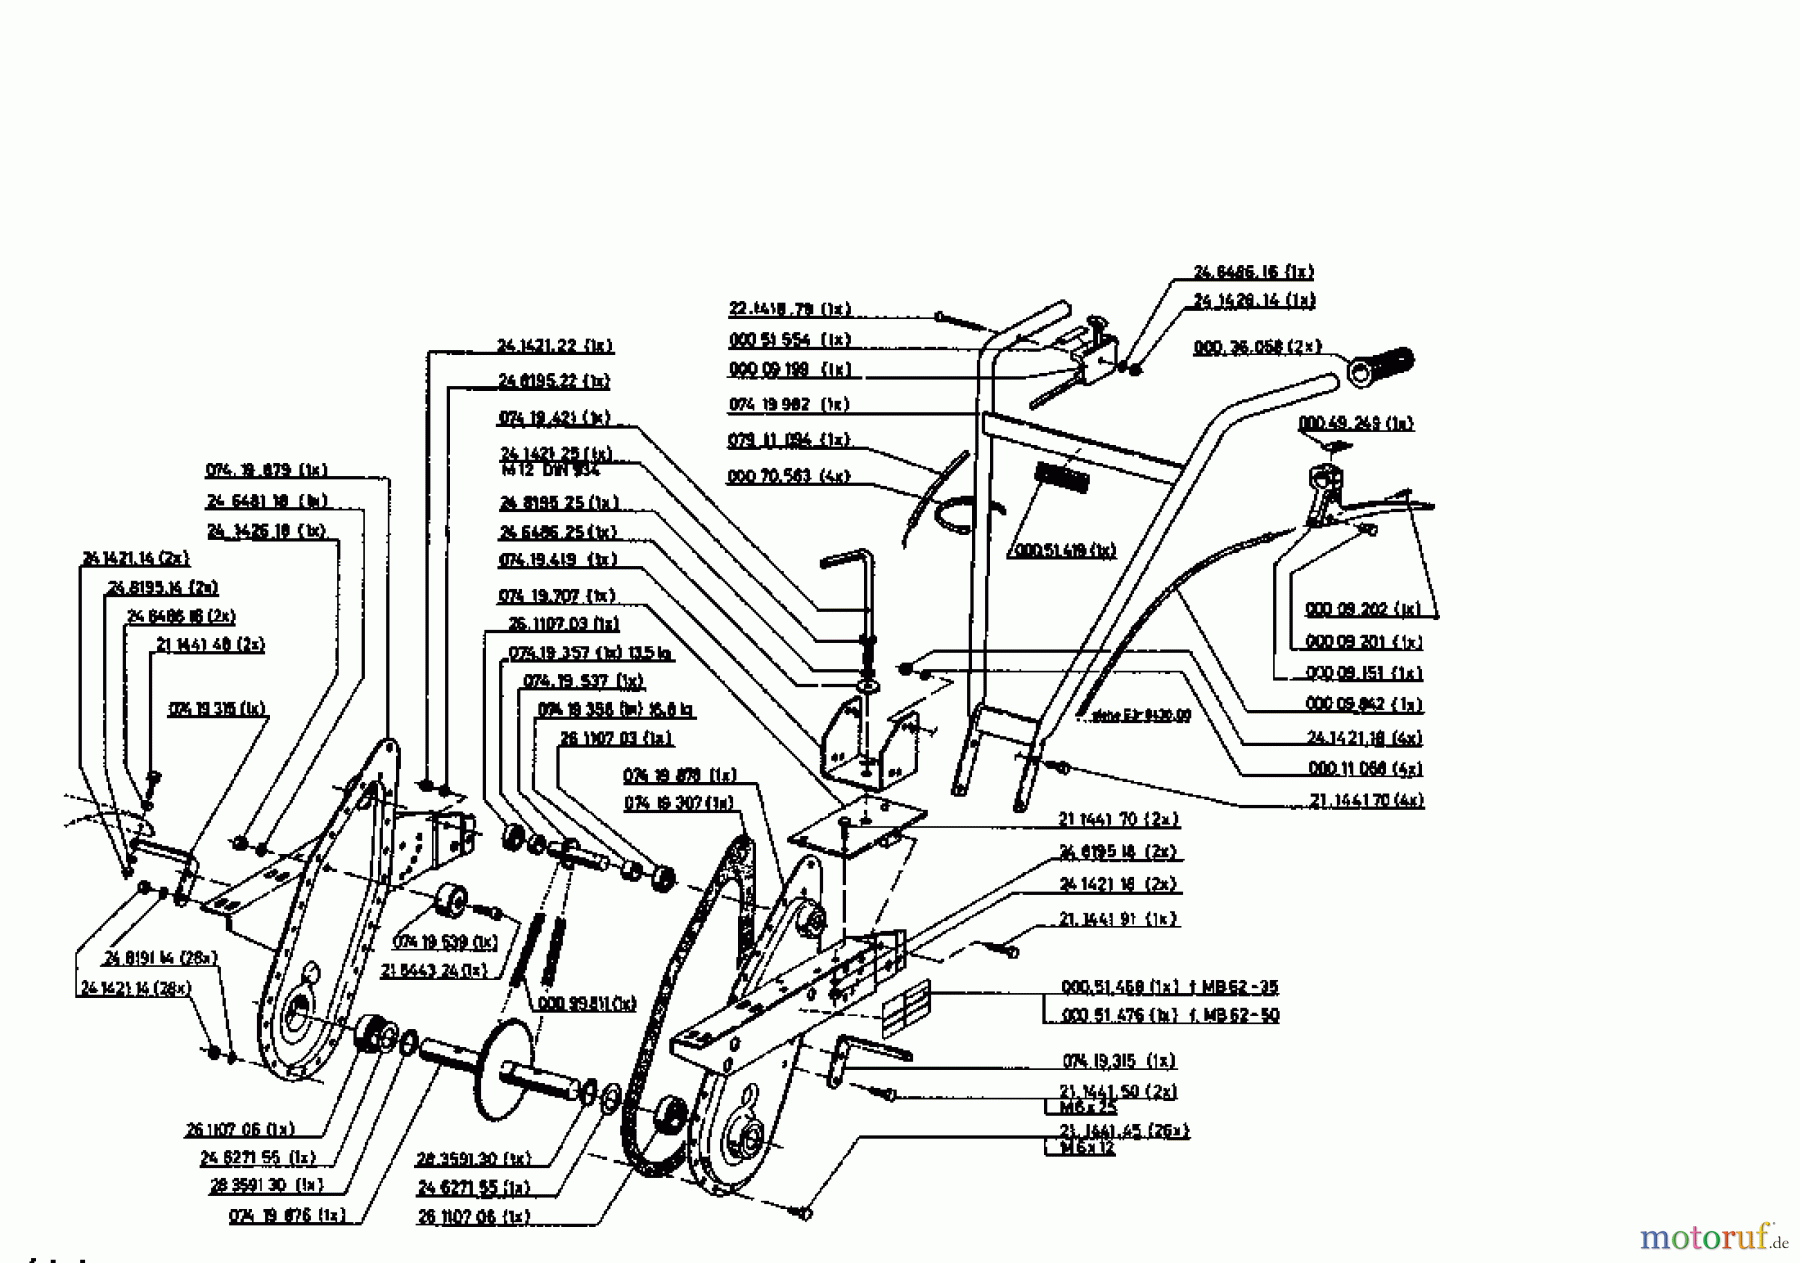  Gutbrod Motorhacken MB 62-50 07518.04  (1994) Grundgerät